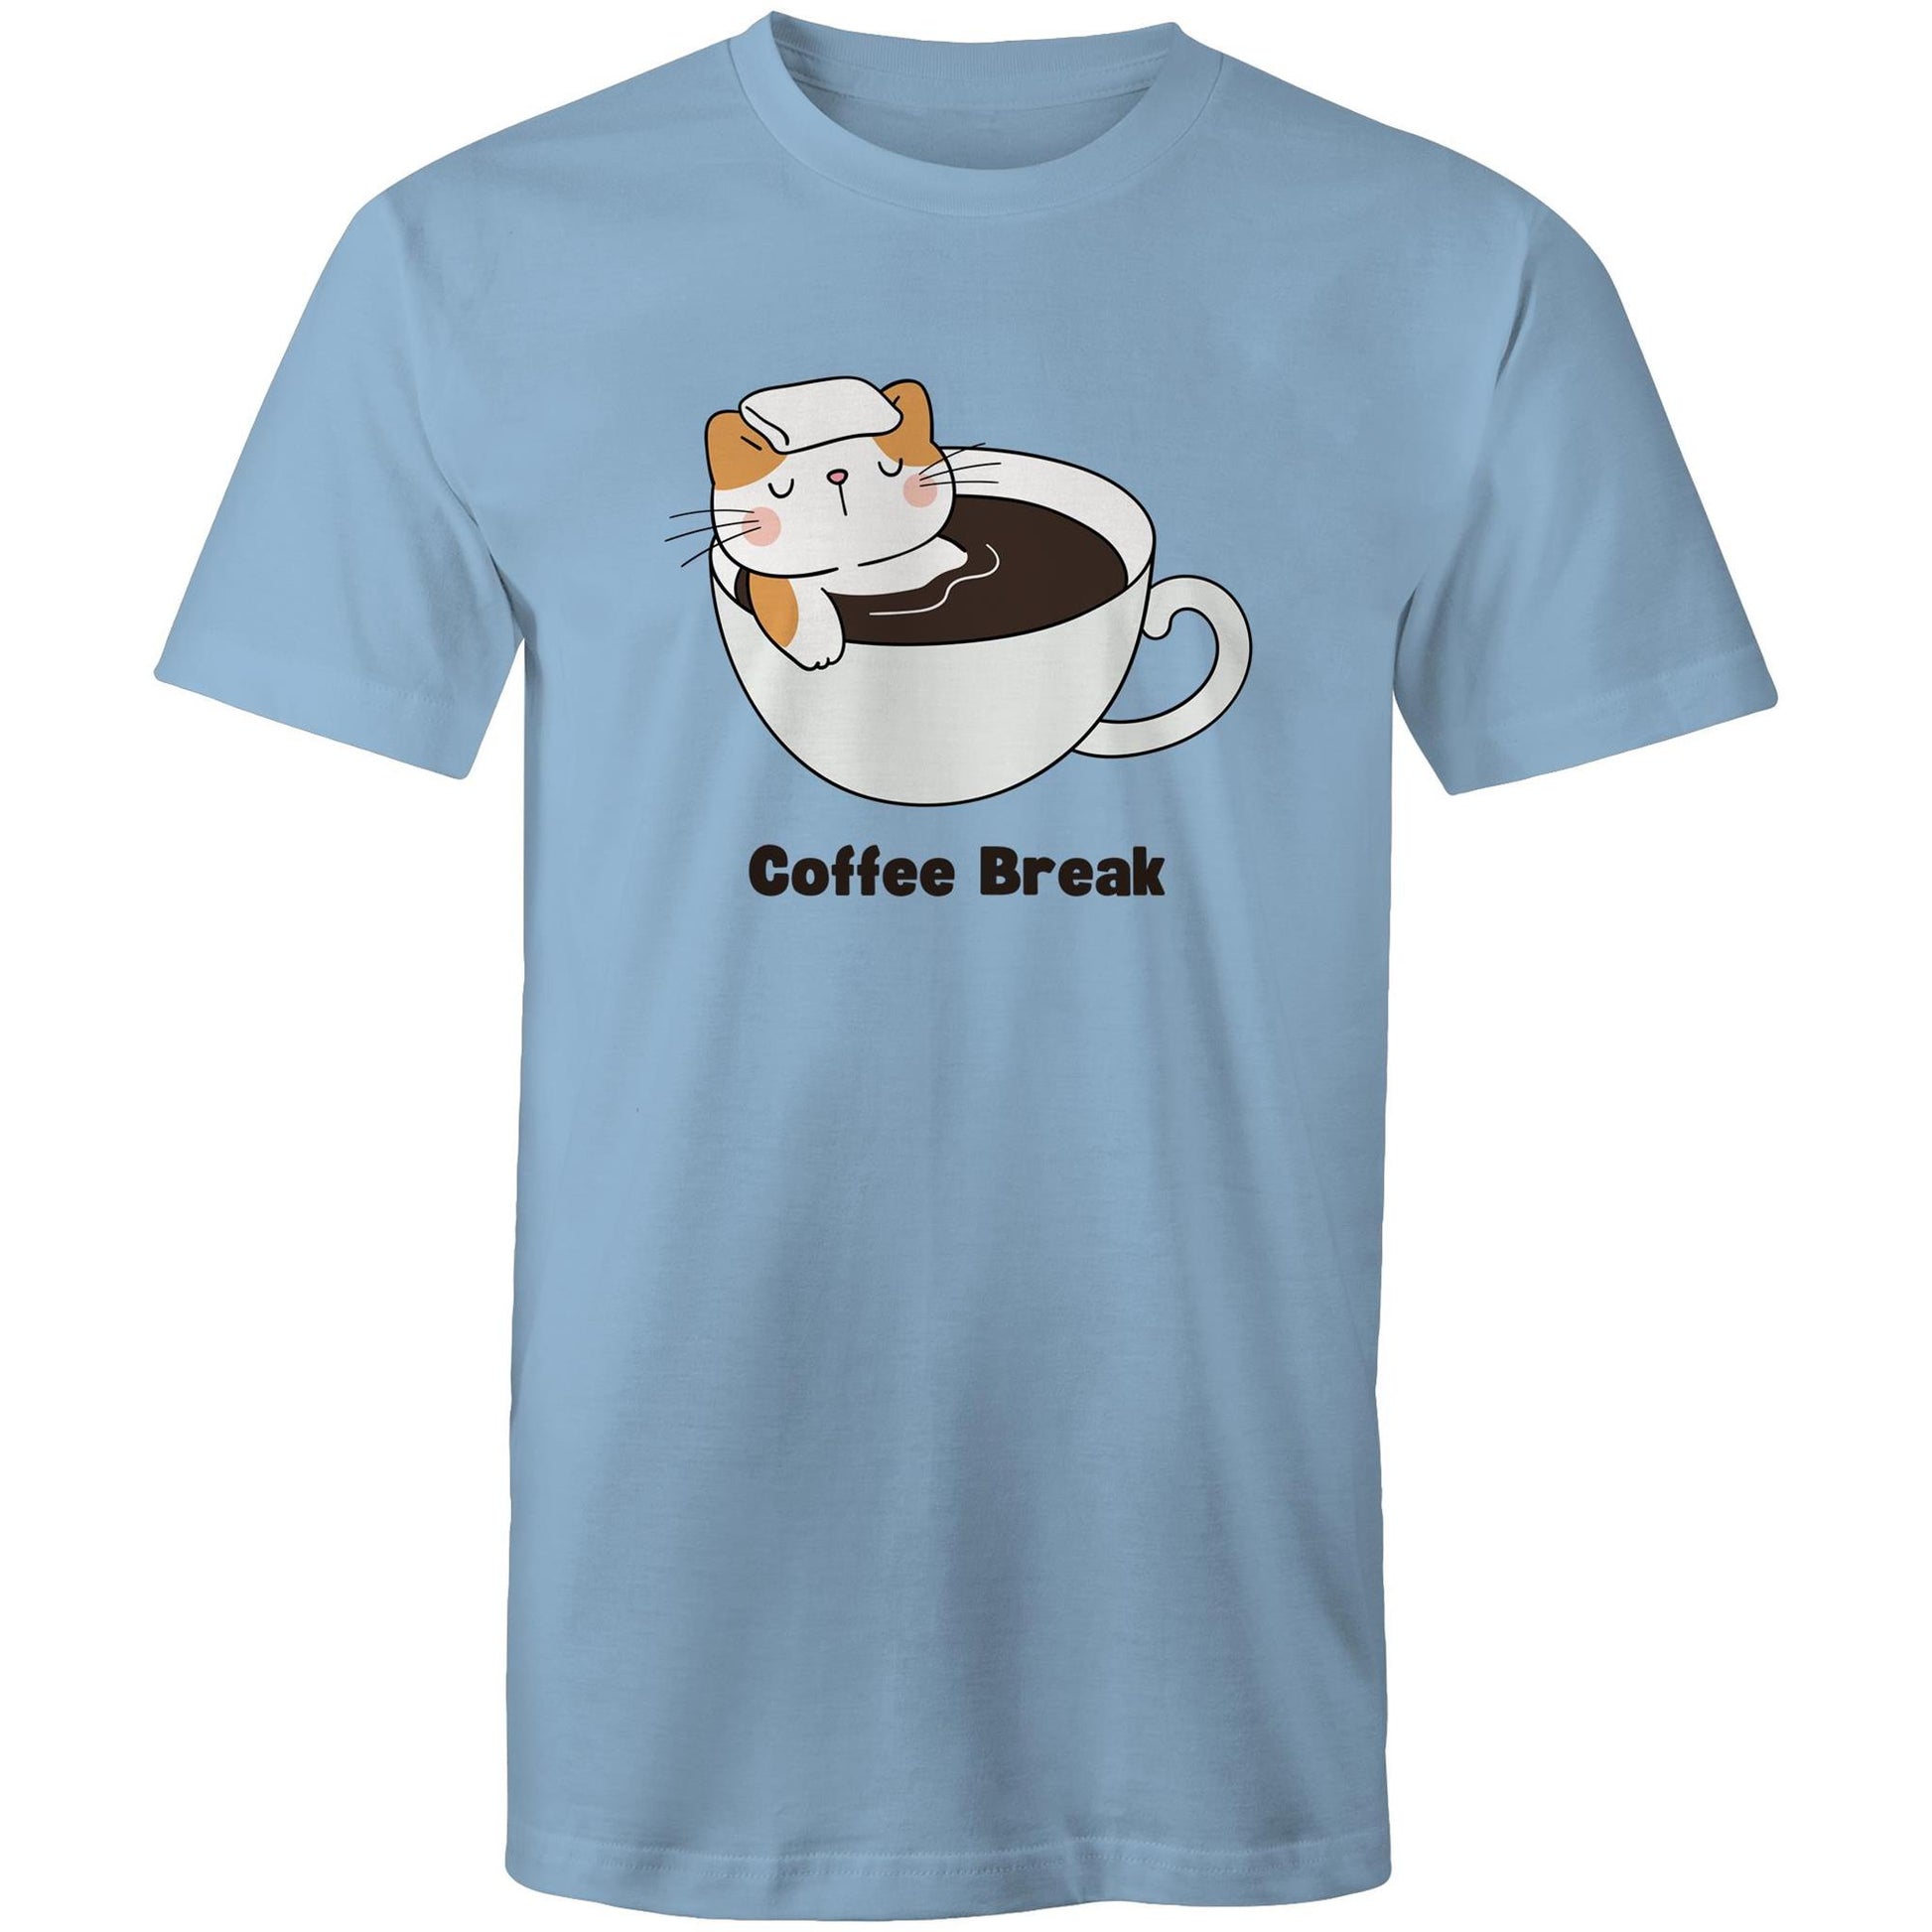 Cat Coffee Break - Mens T-Shirt Carolina Blue Mens T-shirt animal Coffee